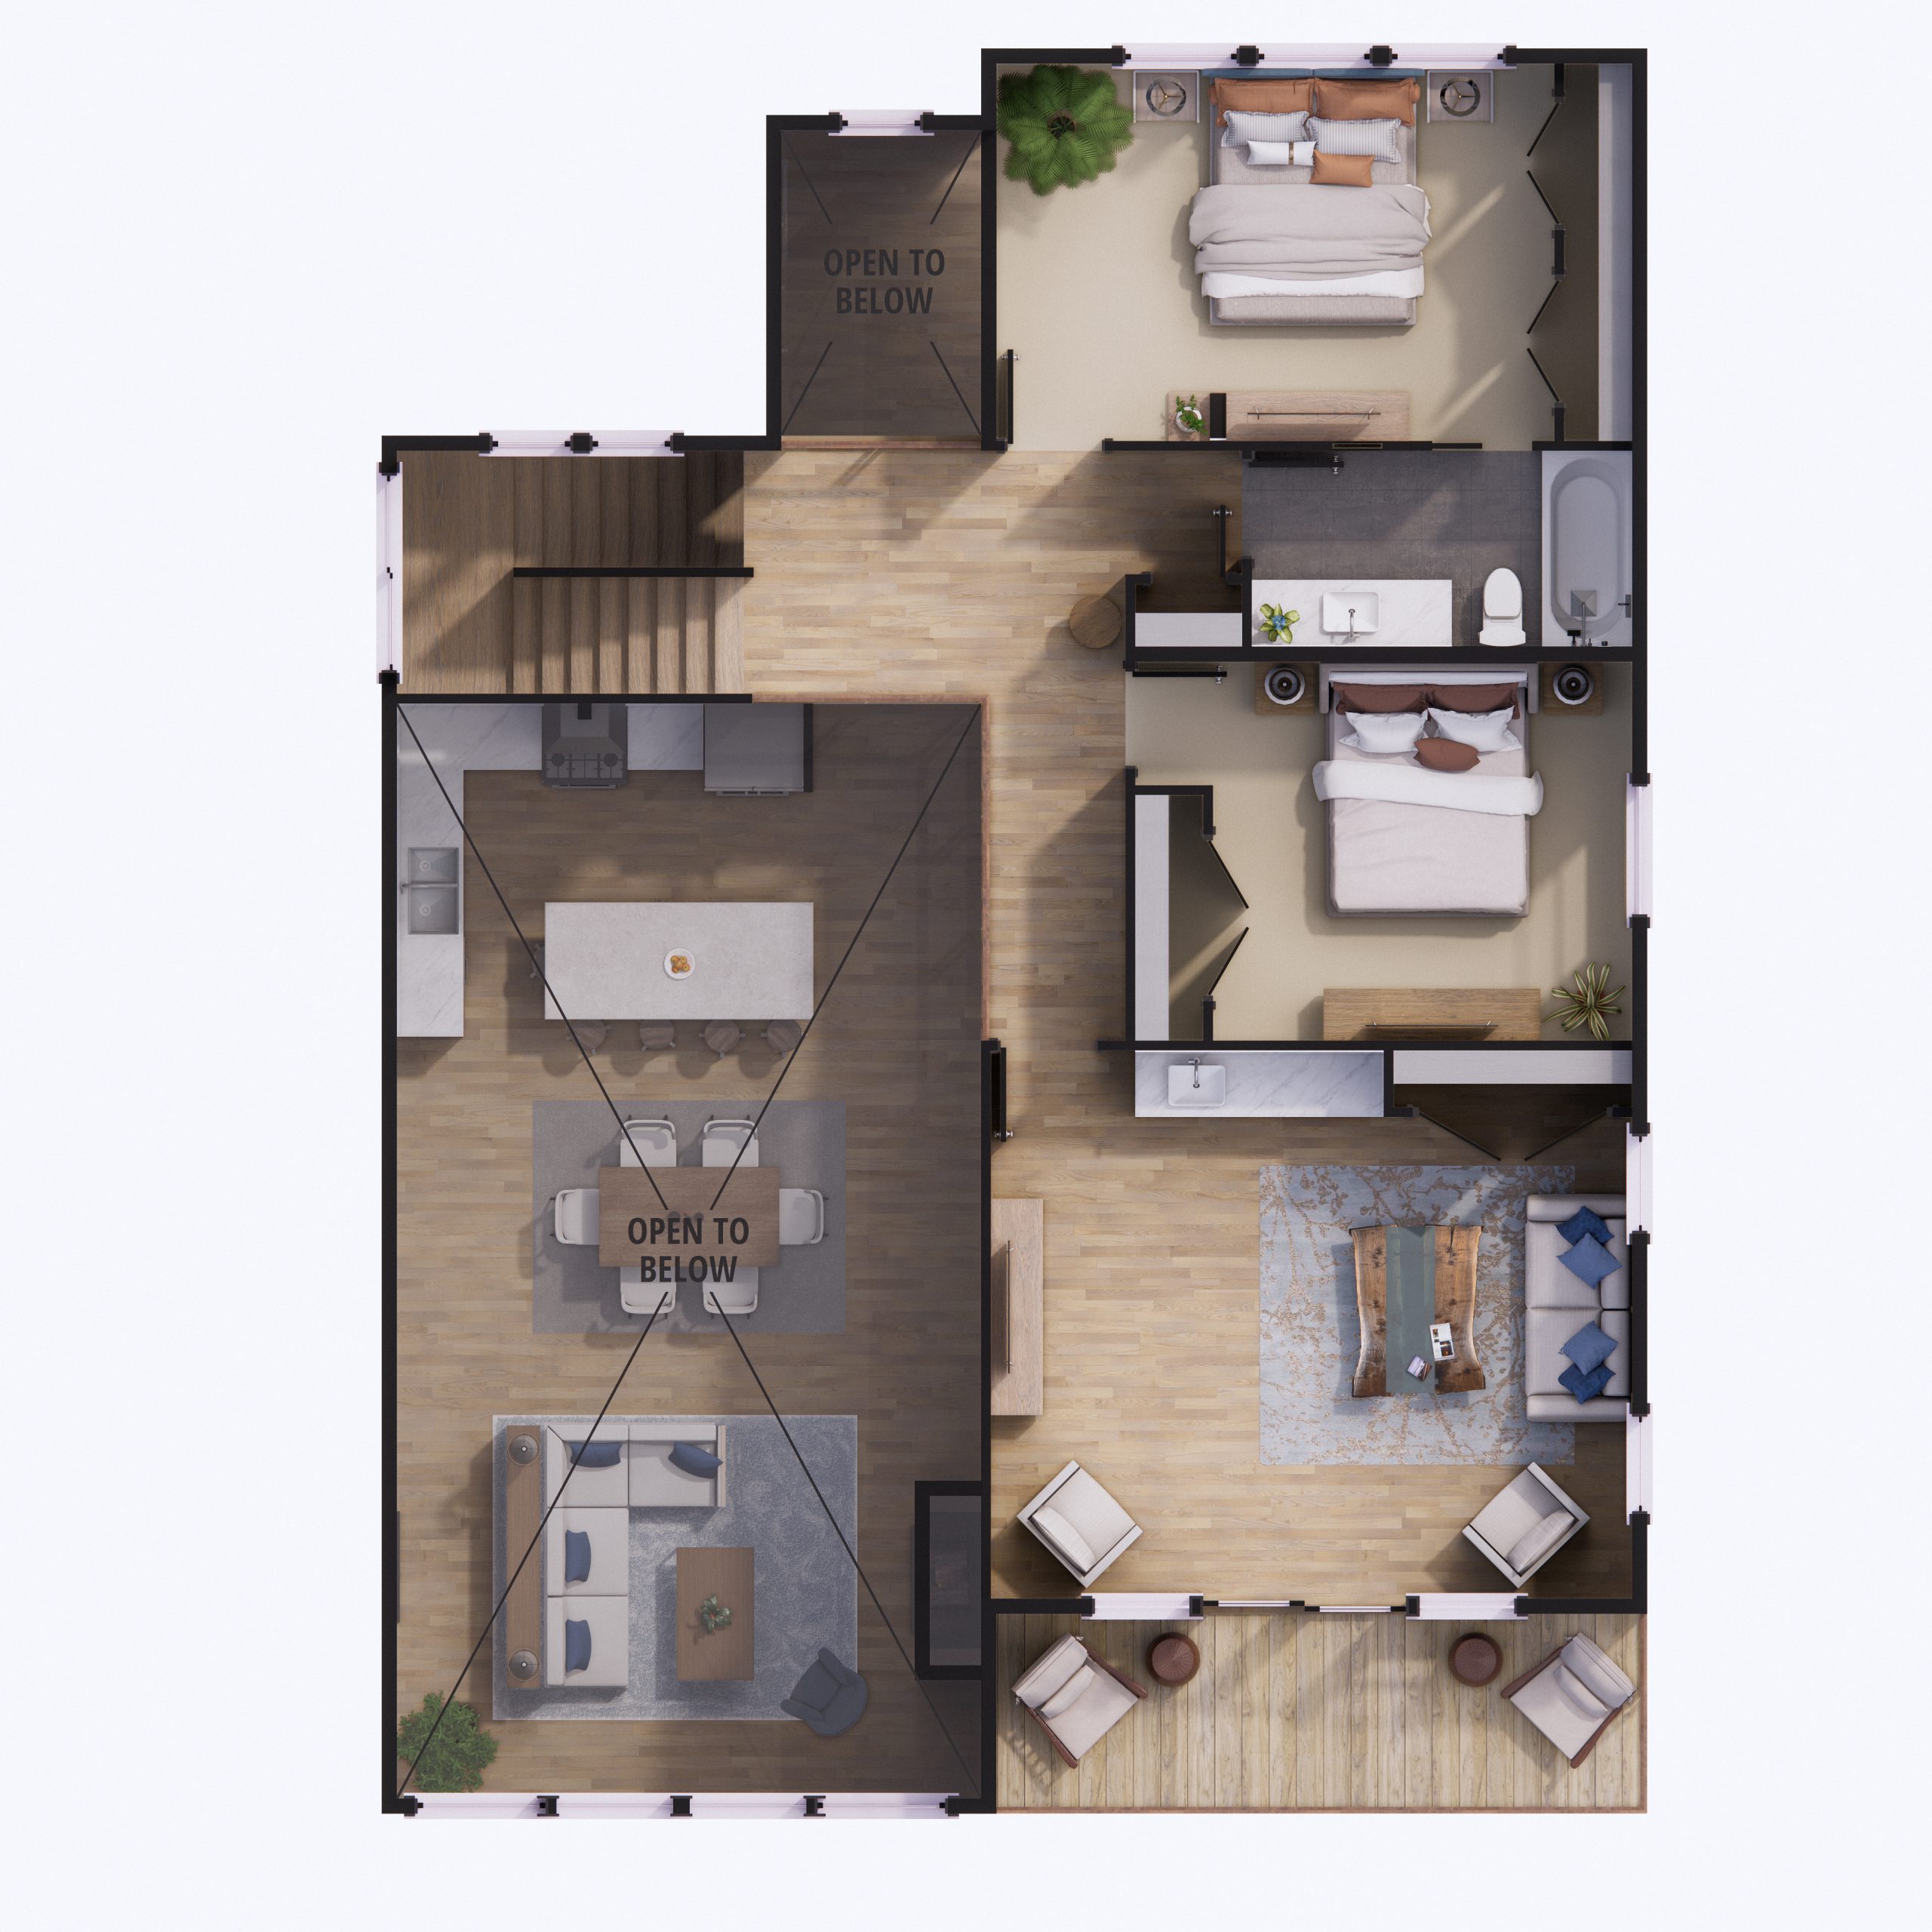 LC Heights - Lot 10 - FP Rendering Main Floor Revised